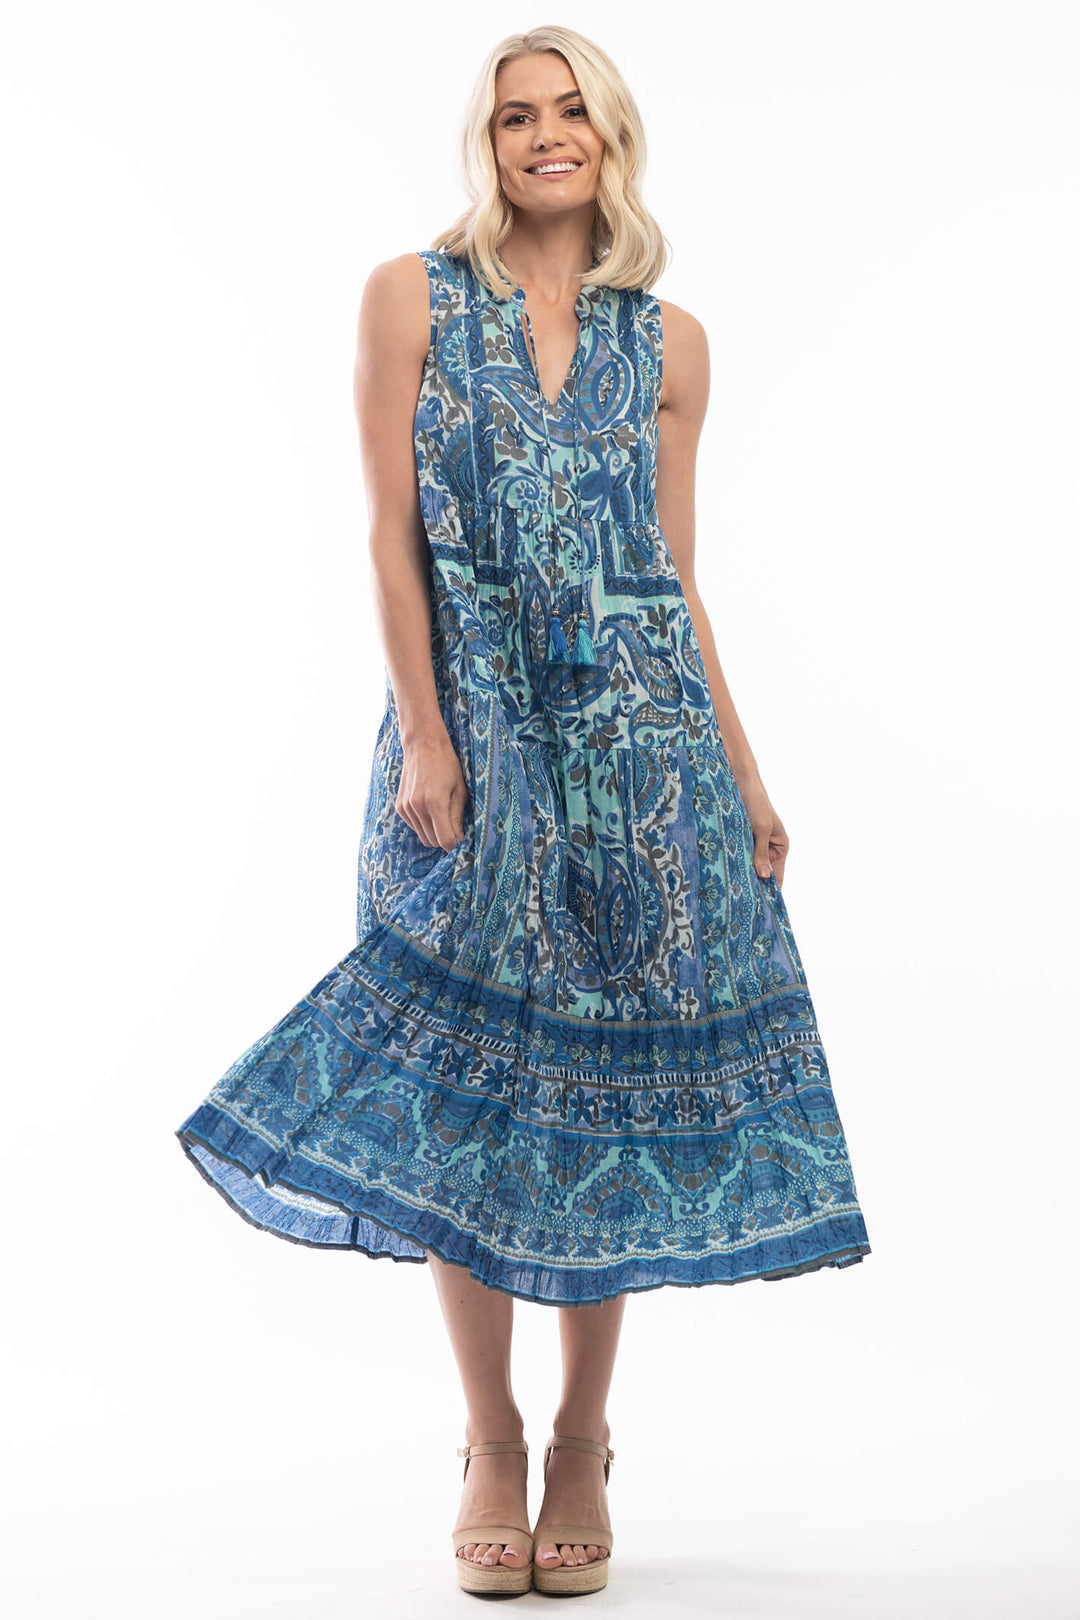 Orientique 6144 Metheran Blue Boho Dress - Shirley Allum Boutique